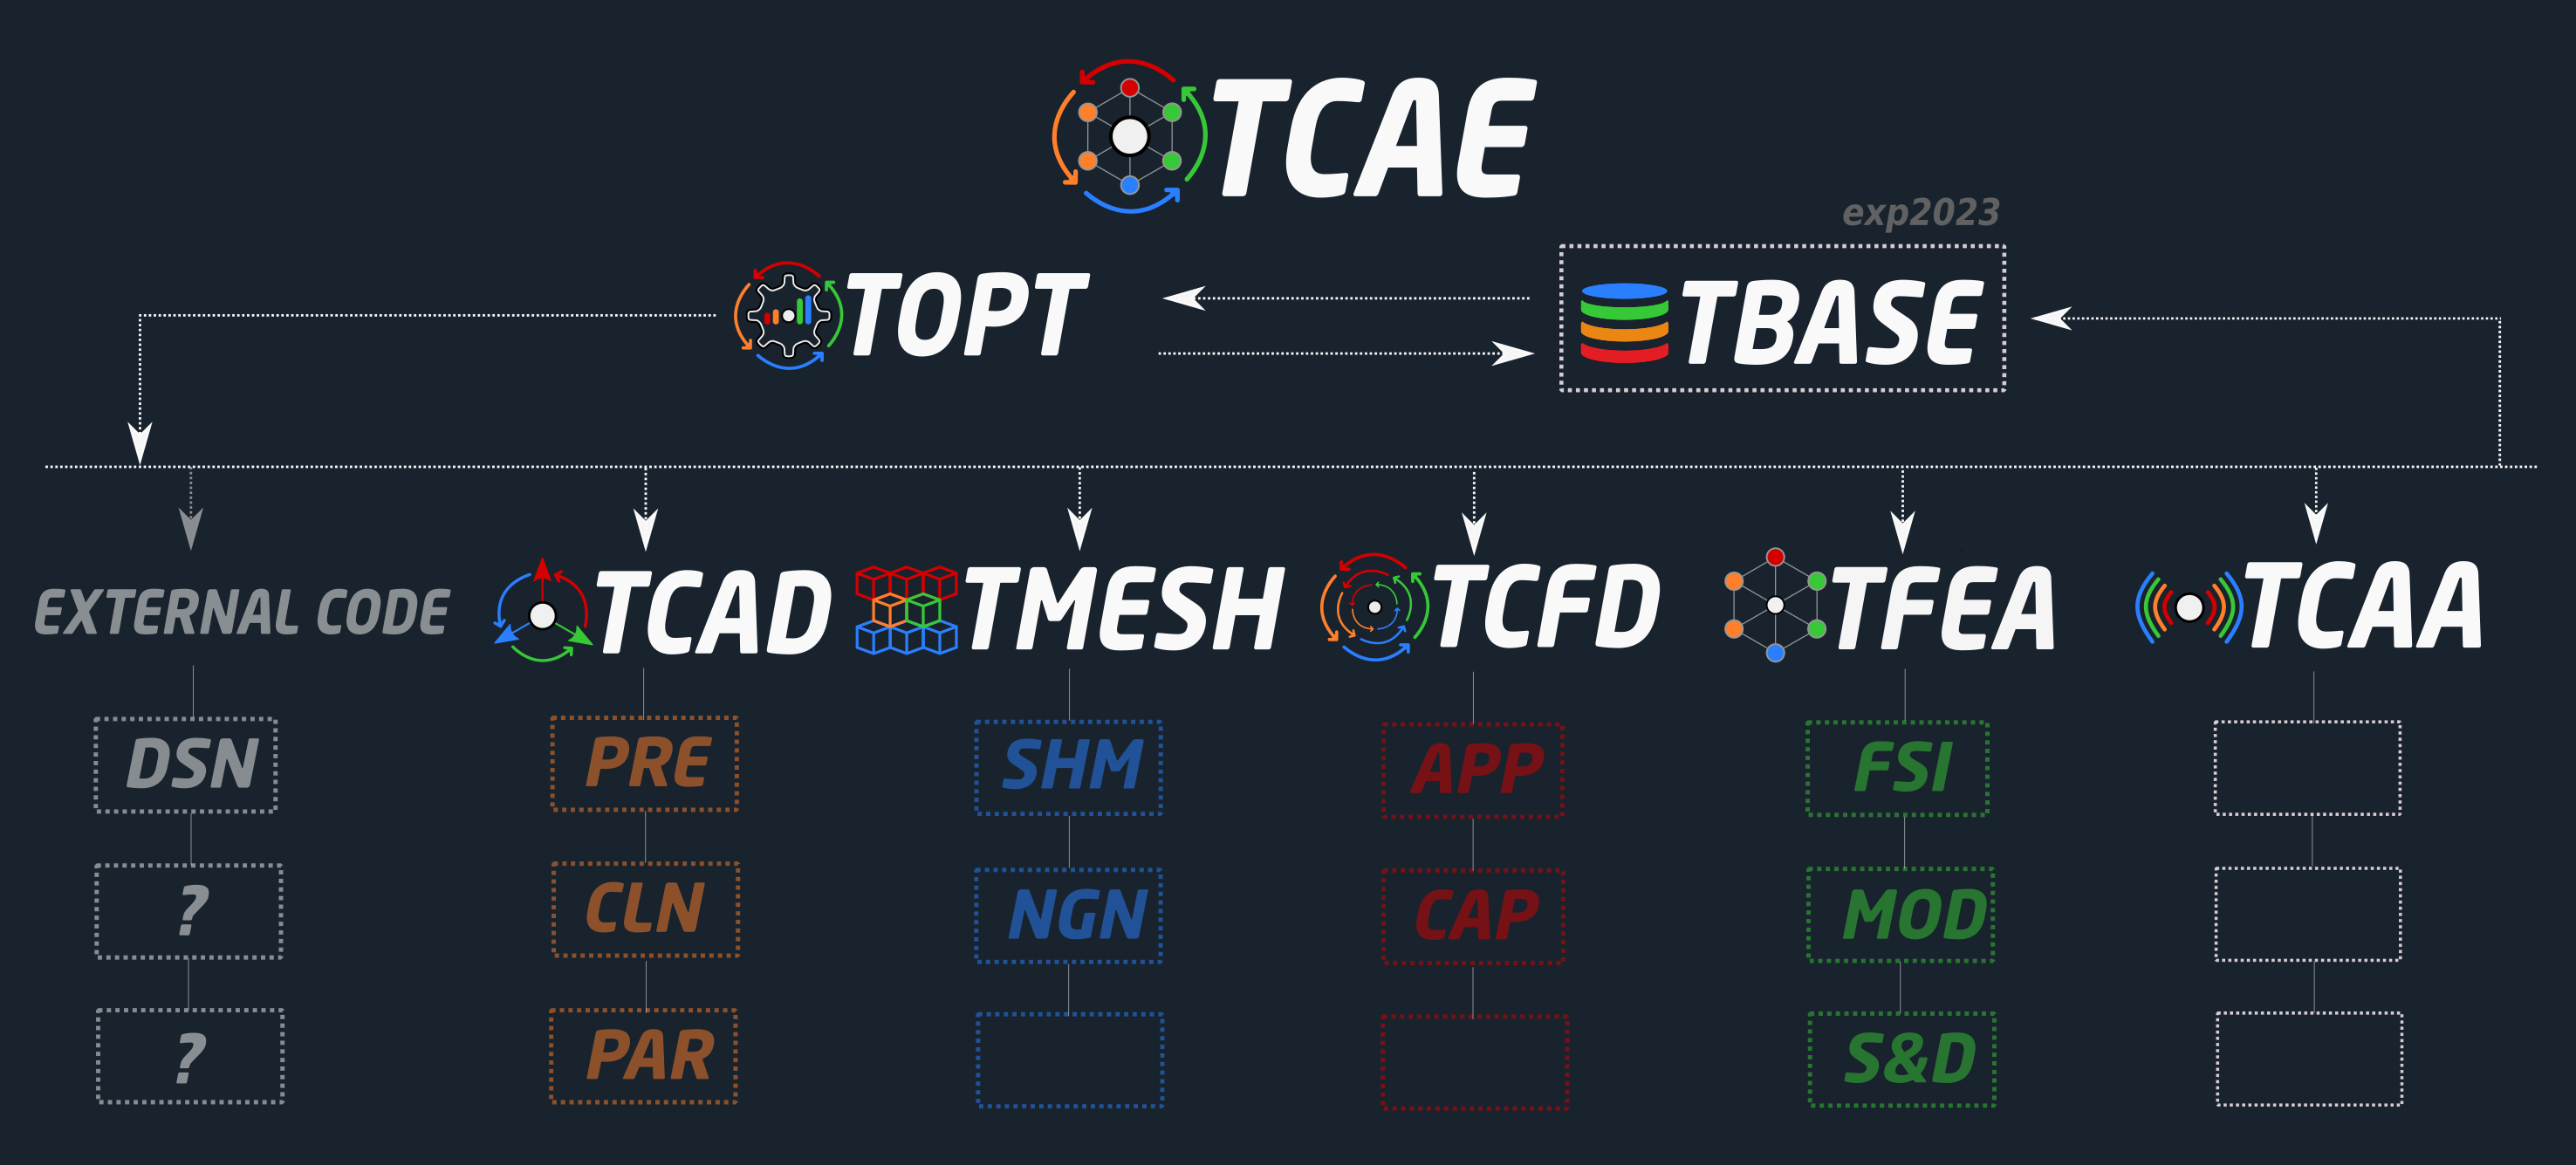 TCAE scheme wob